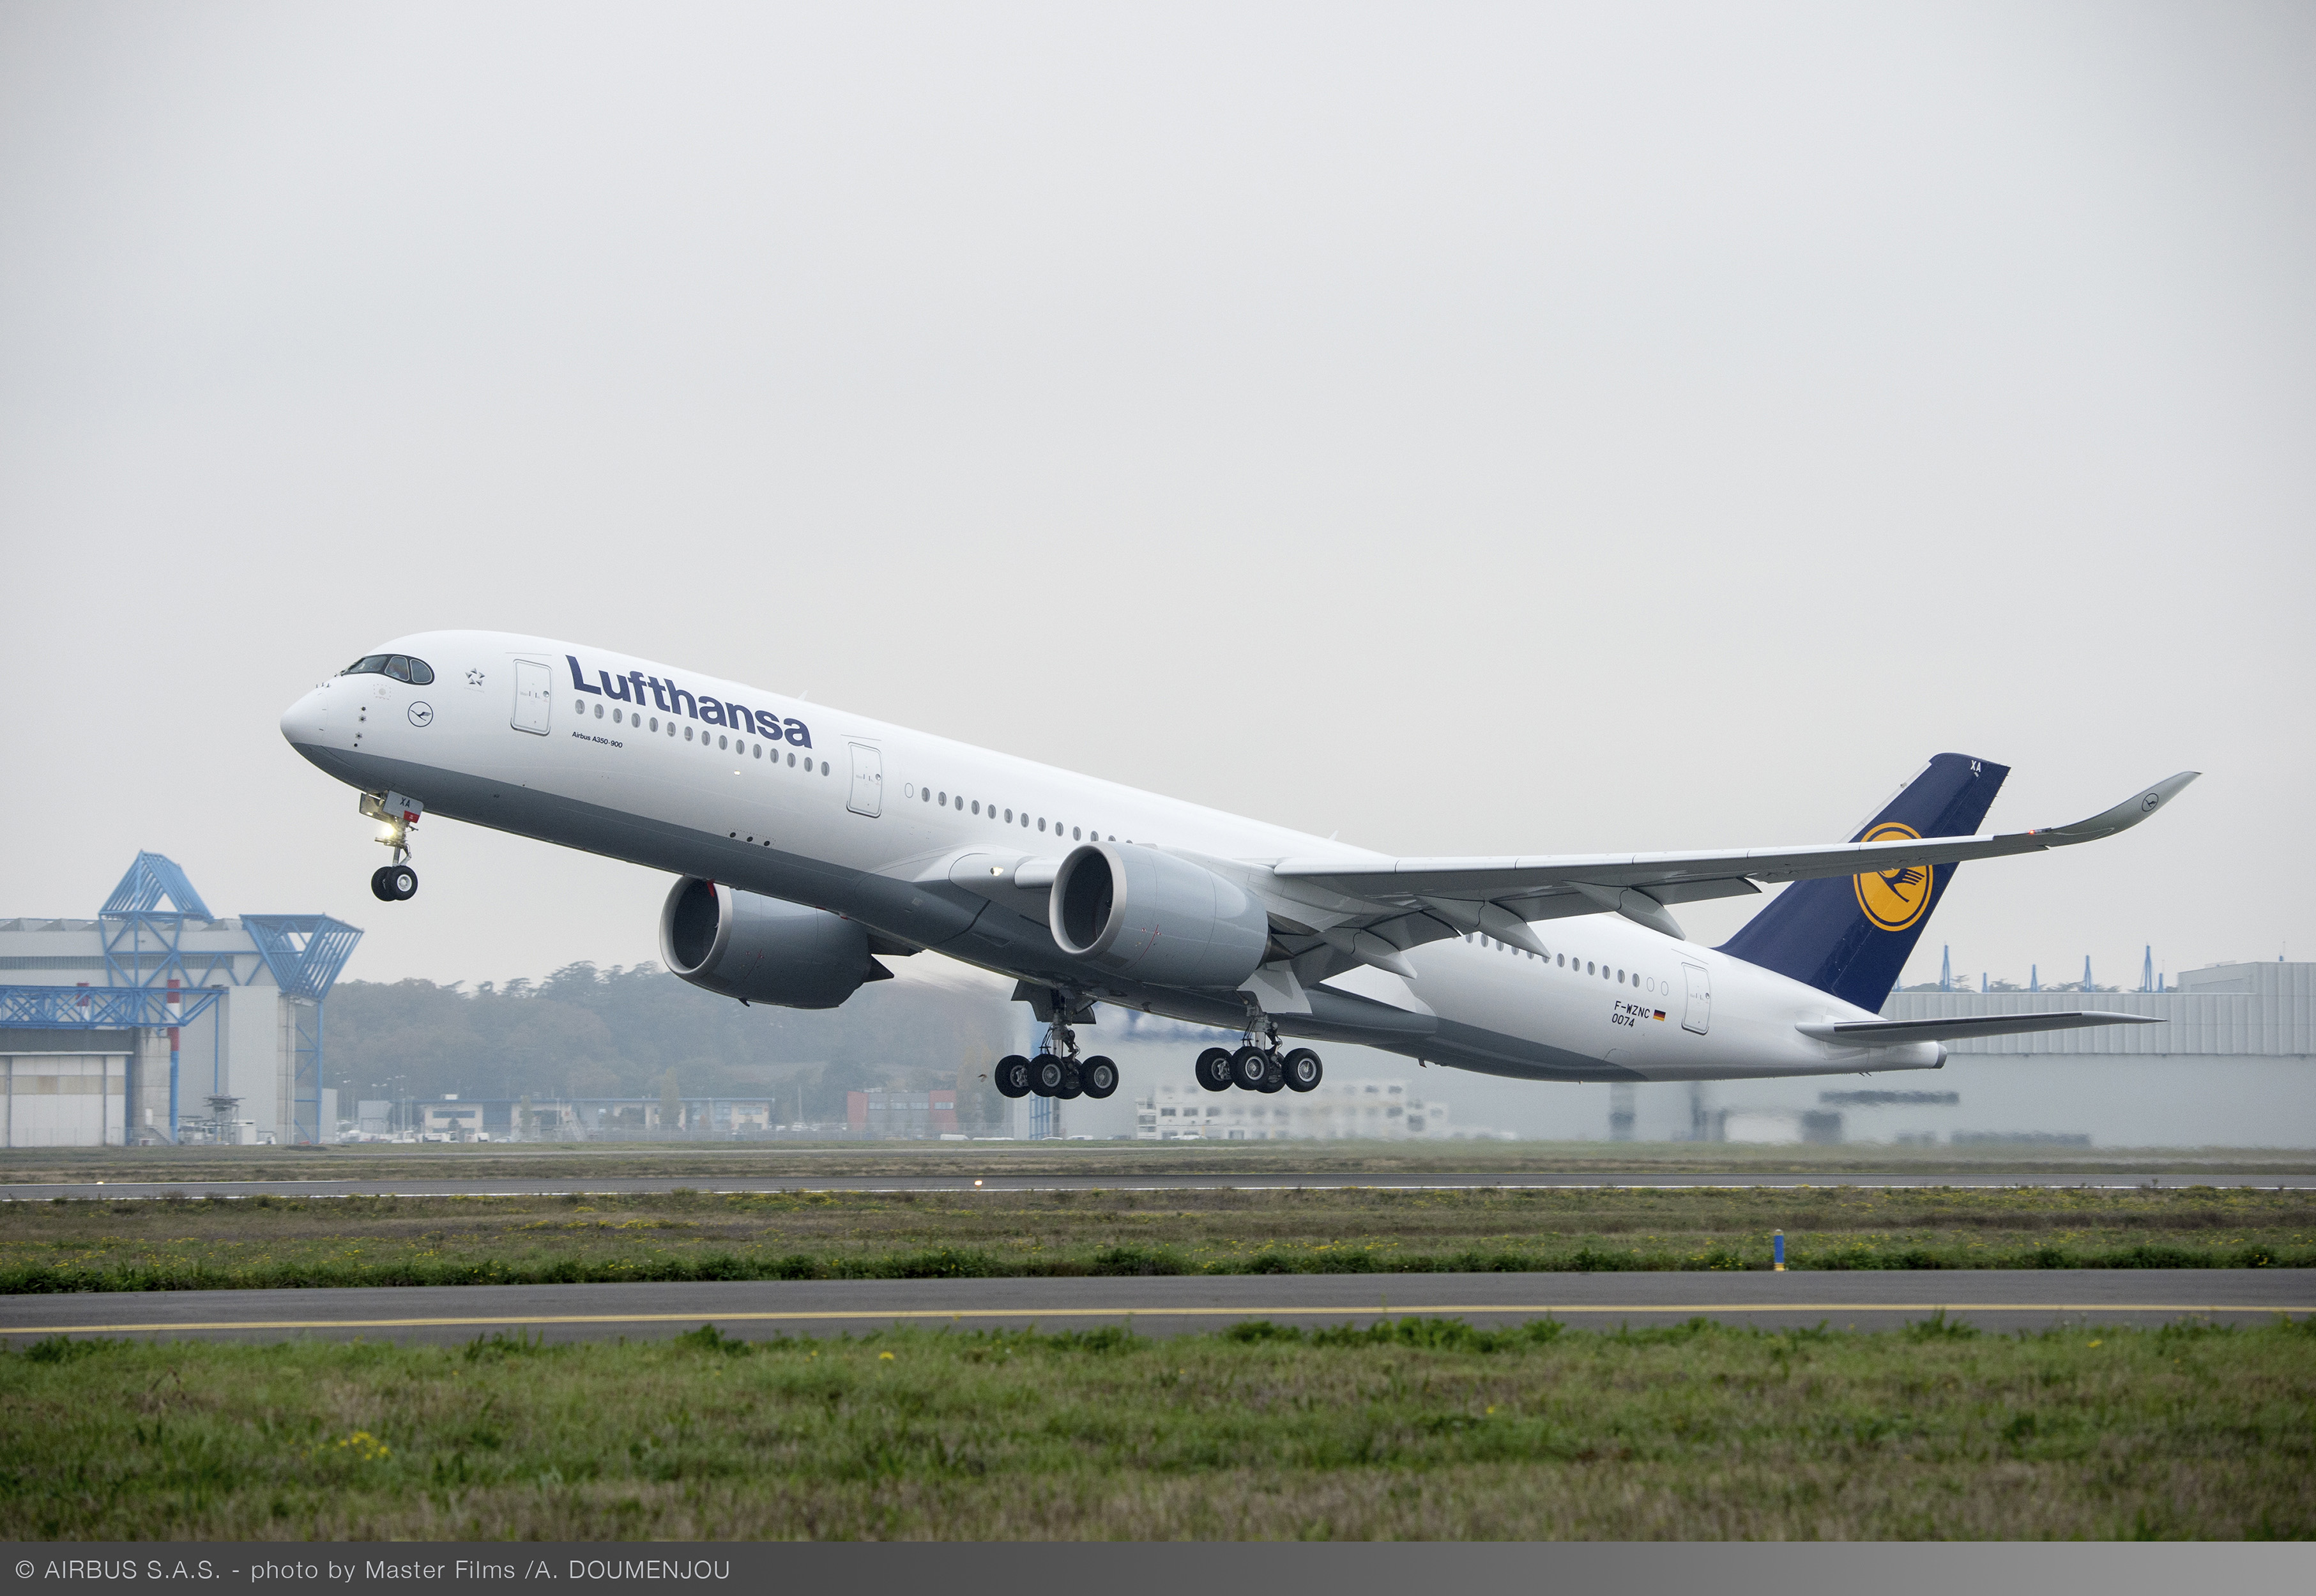 Lufthansa's first A350 completes her maiden flight......